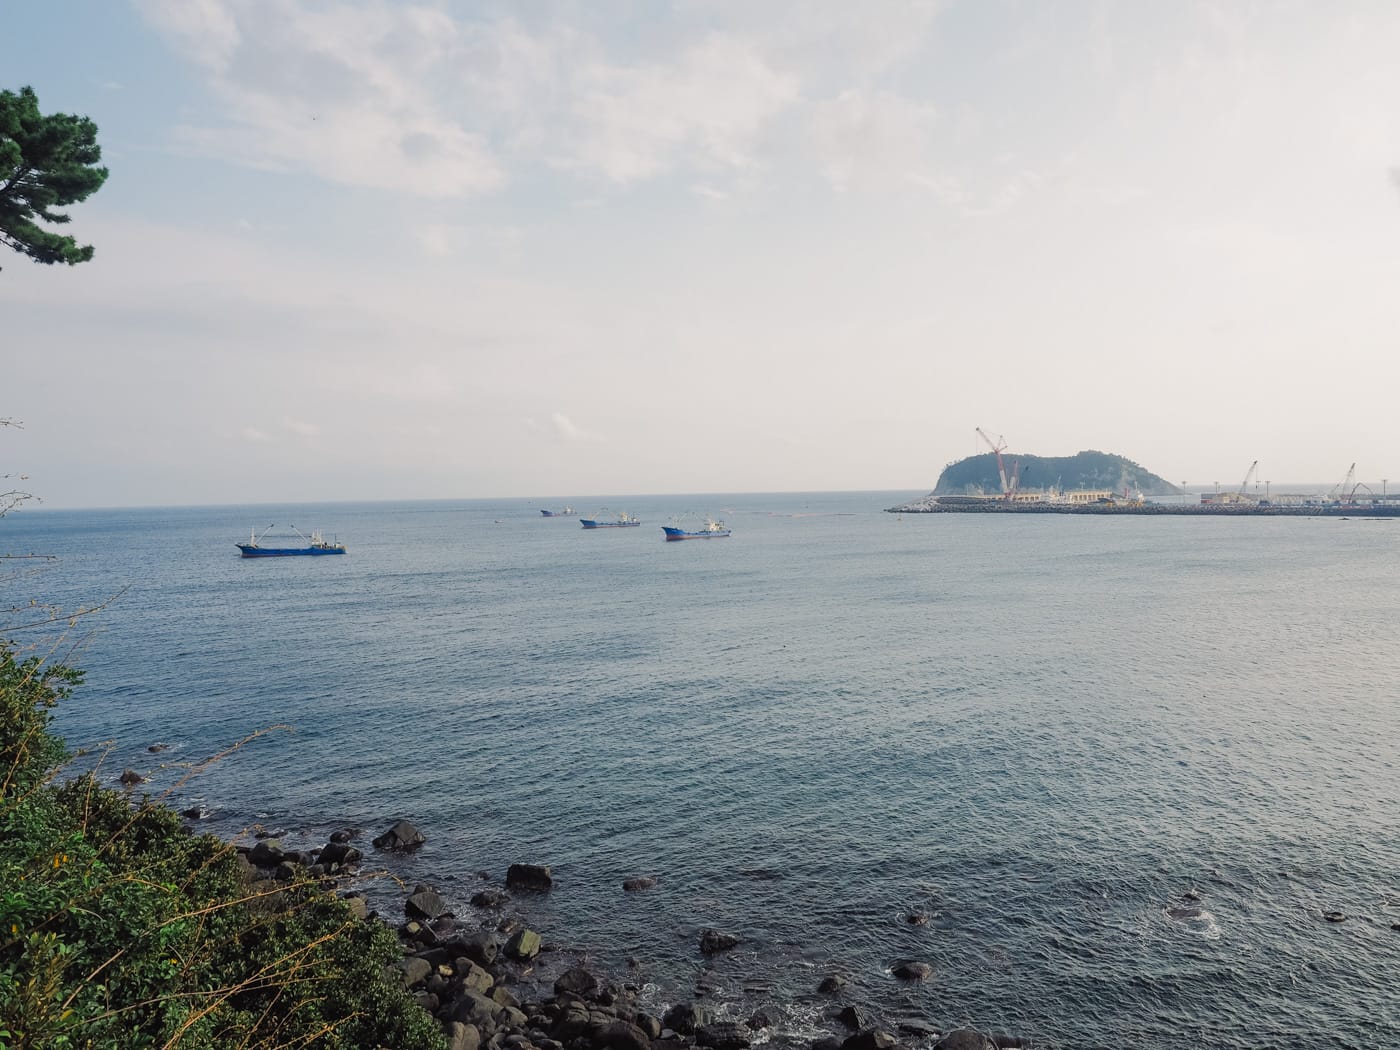 Korea - Mt Hallasan - Looking out to sea